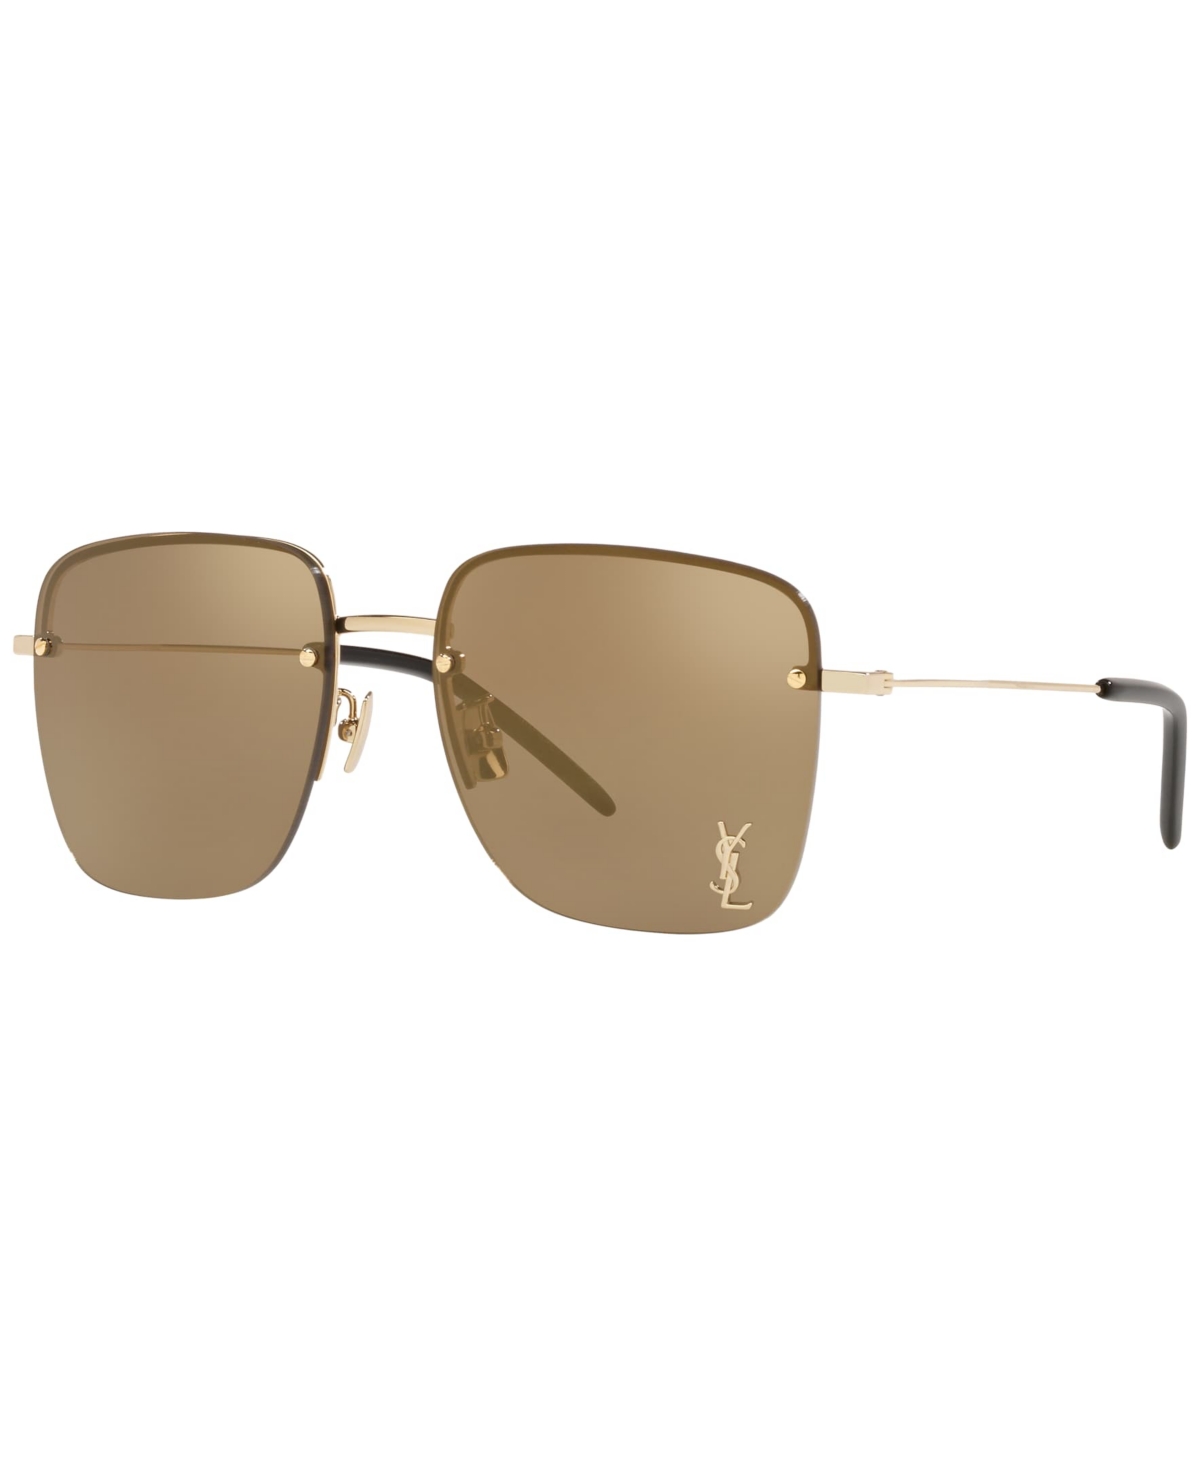 Saint Laurent Women's Sunglasses, Sl 312 M-006 58